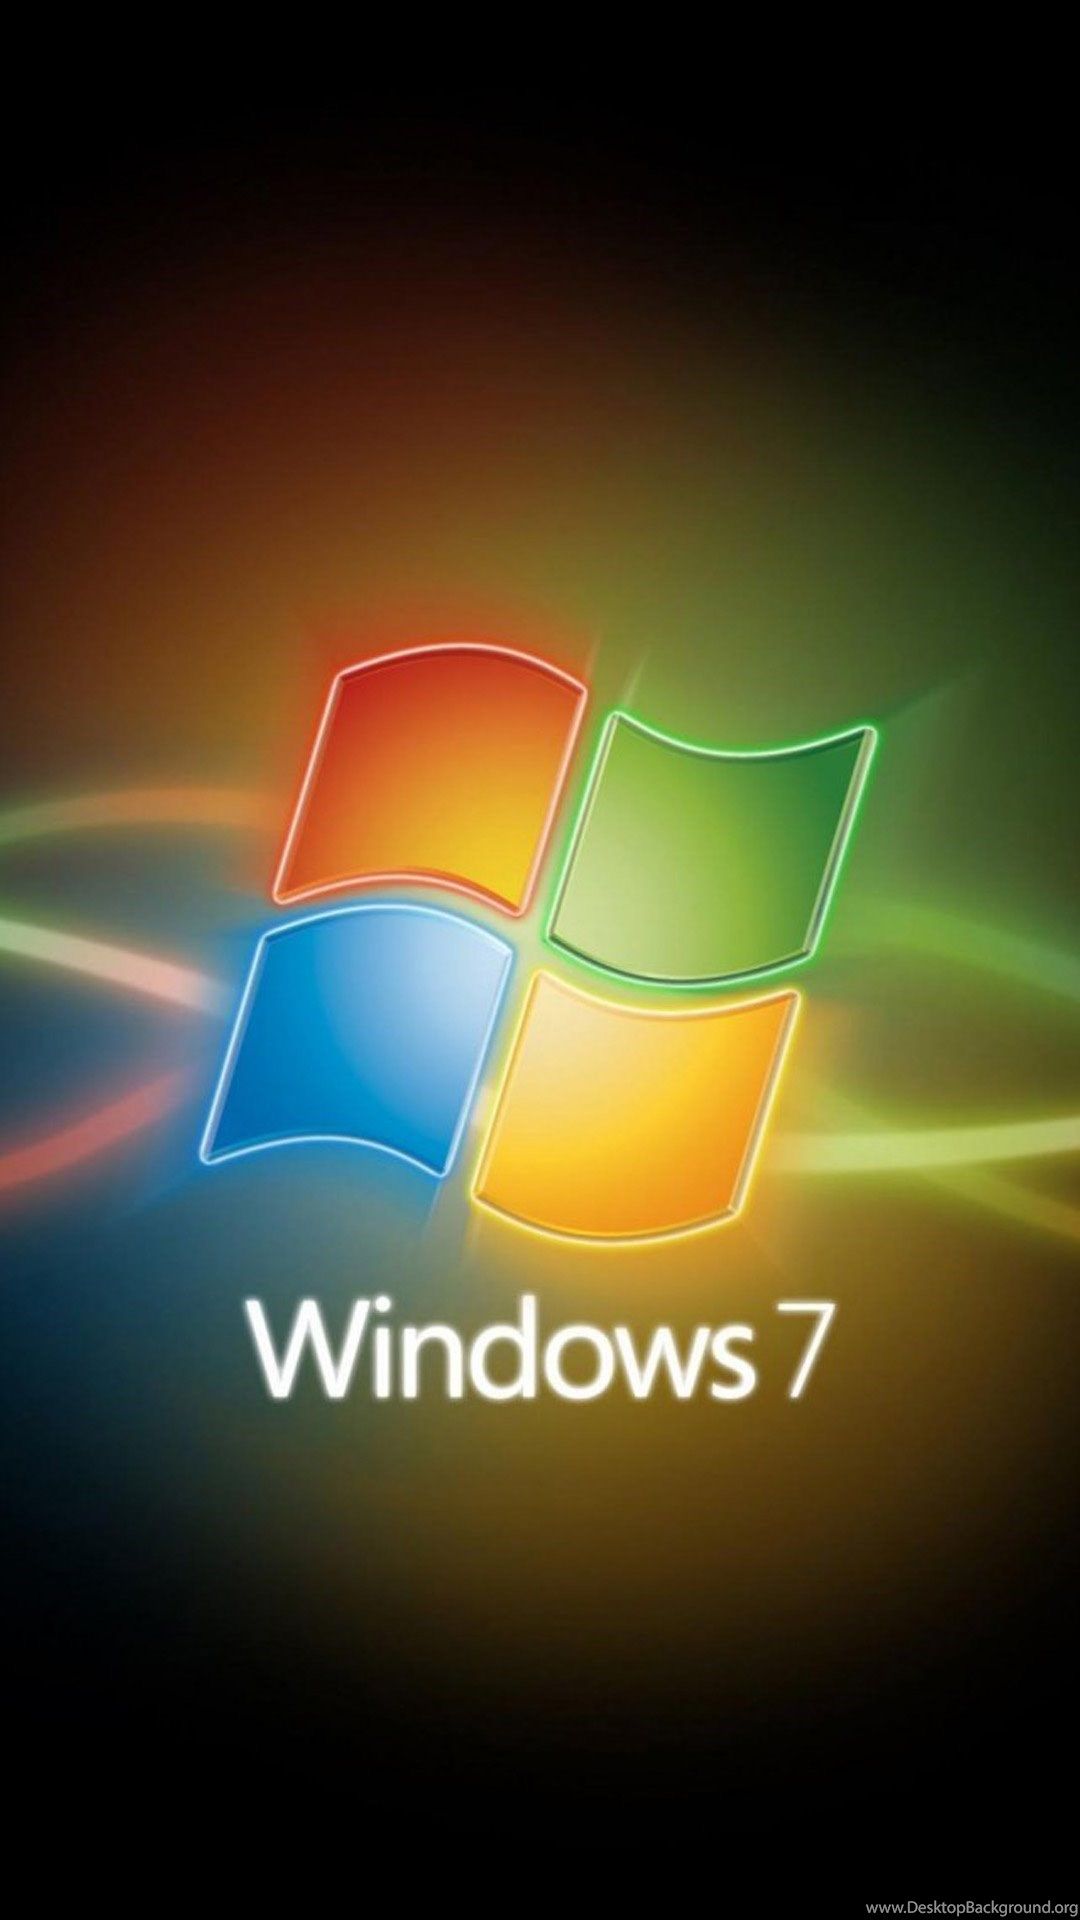 windows 7 service pack